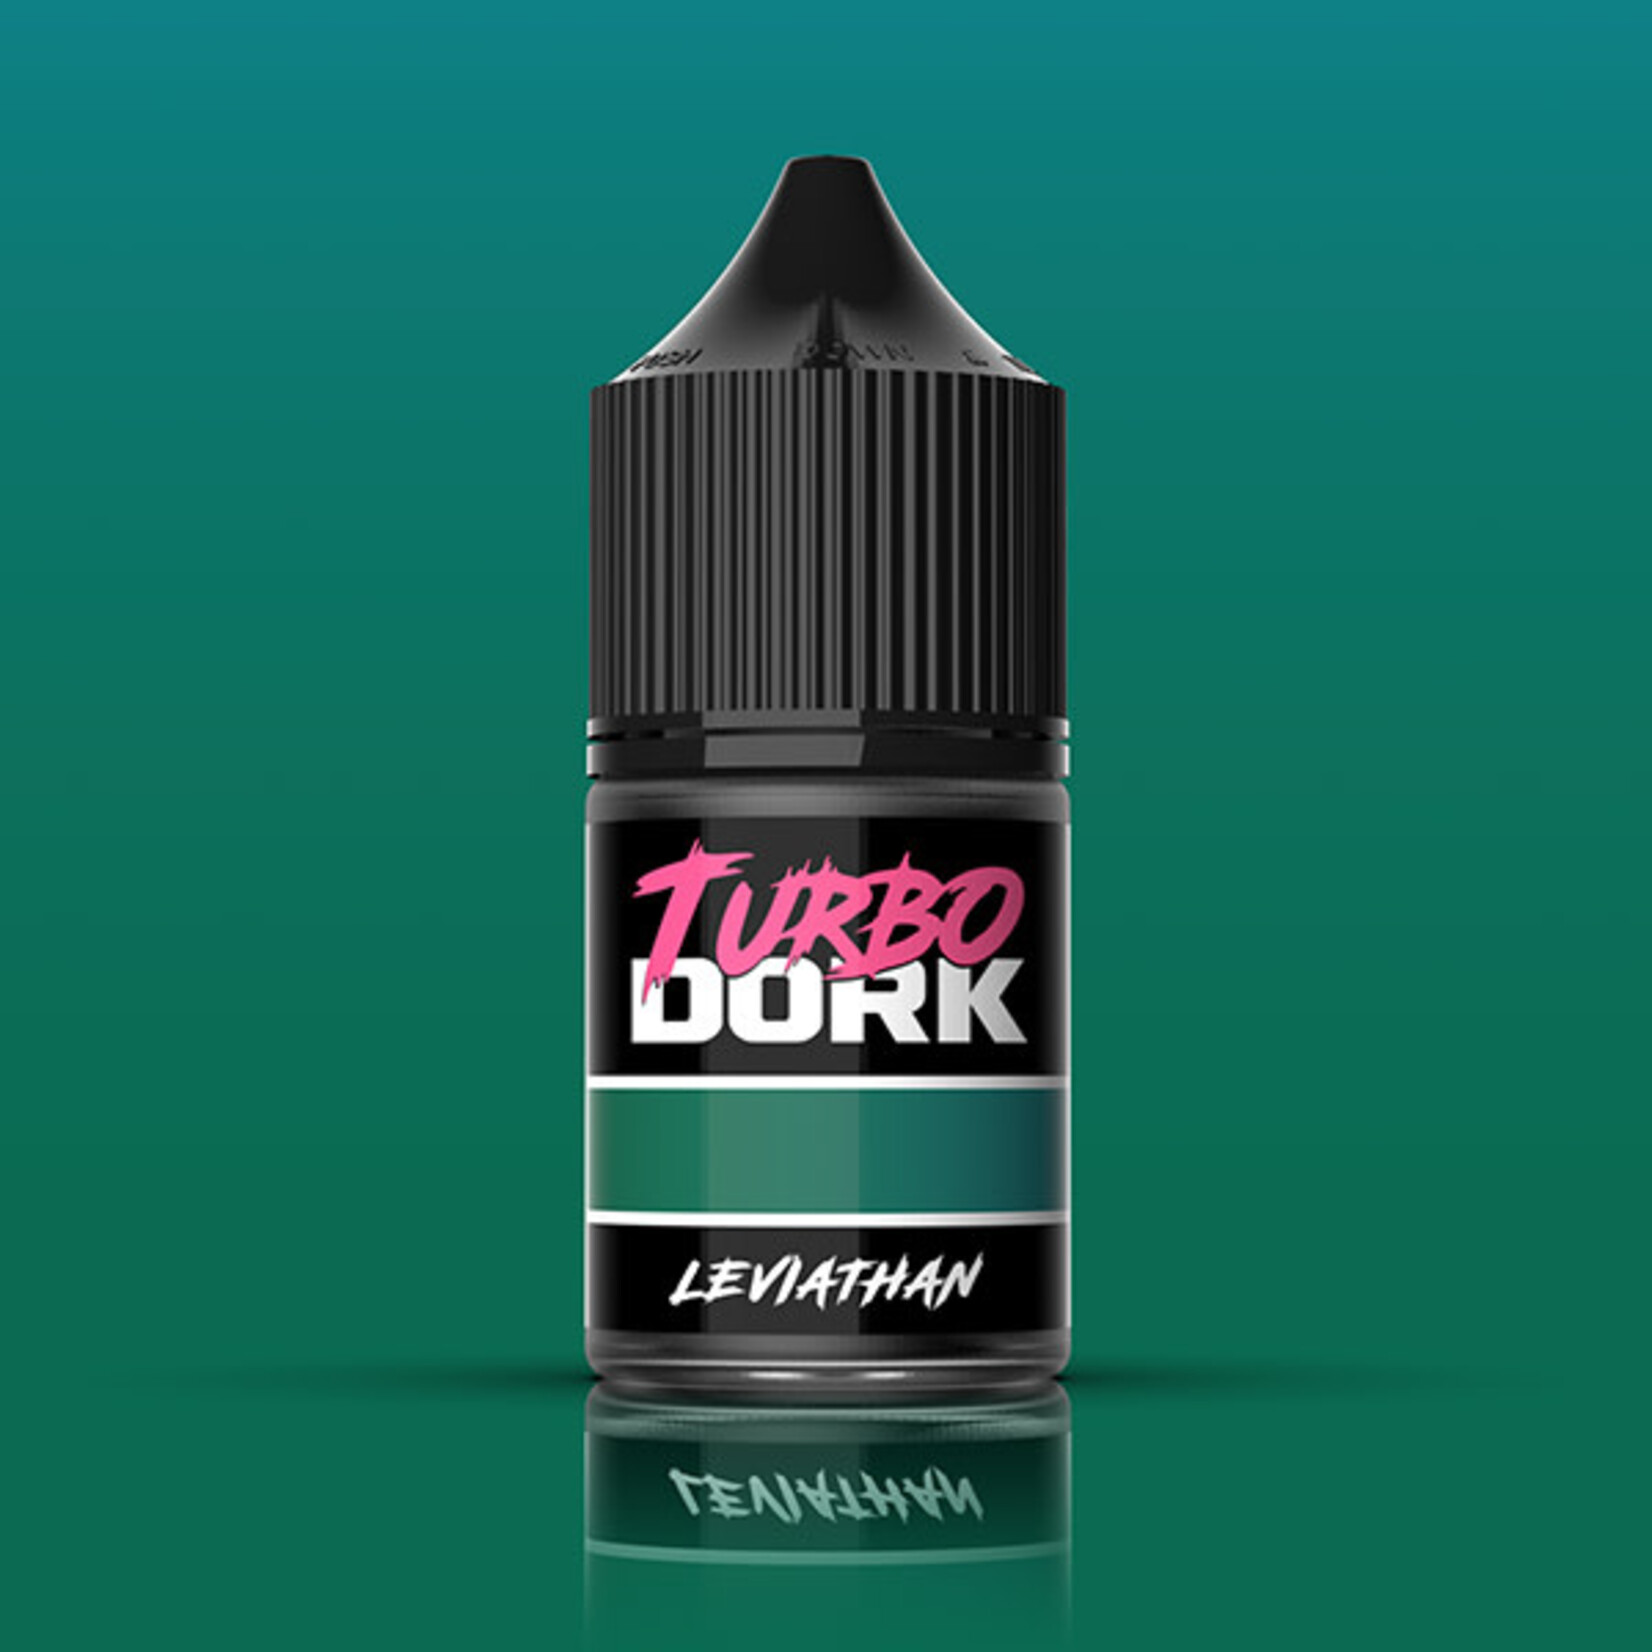 Turbo Dork Turboshift Acrylic Paint - Leviathan